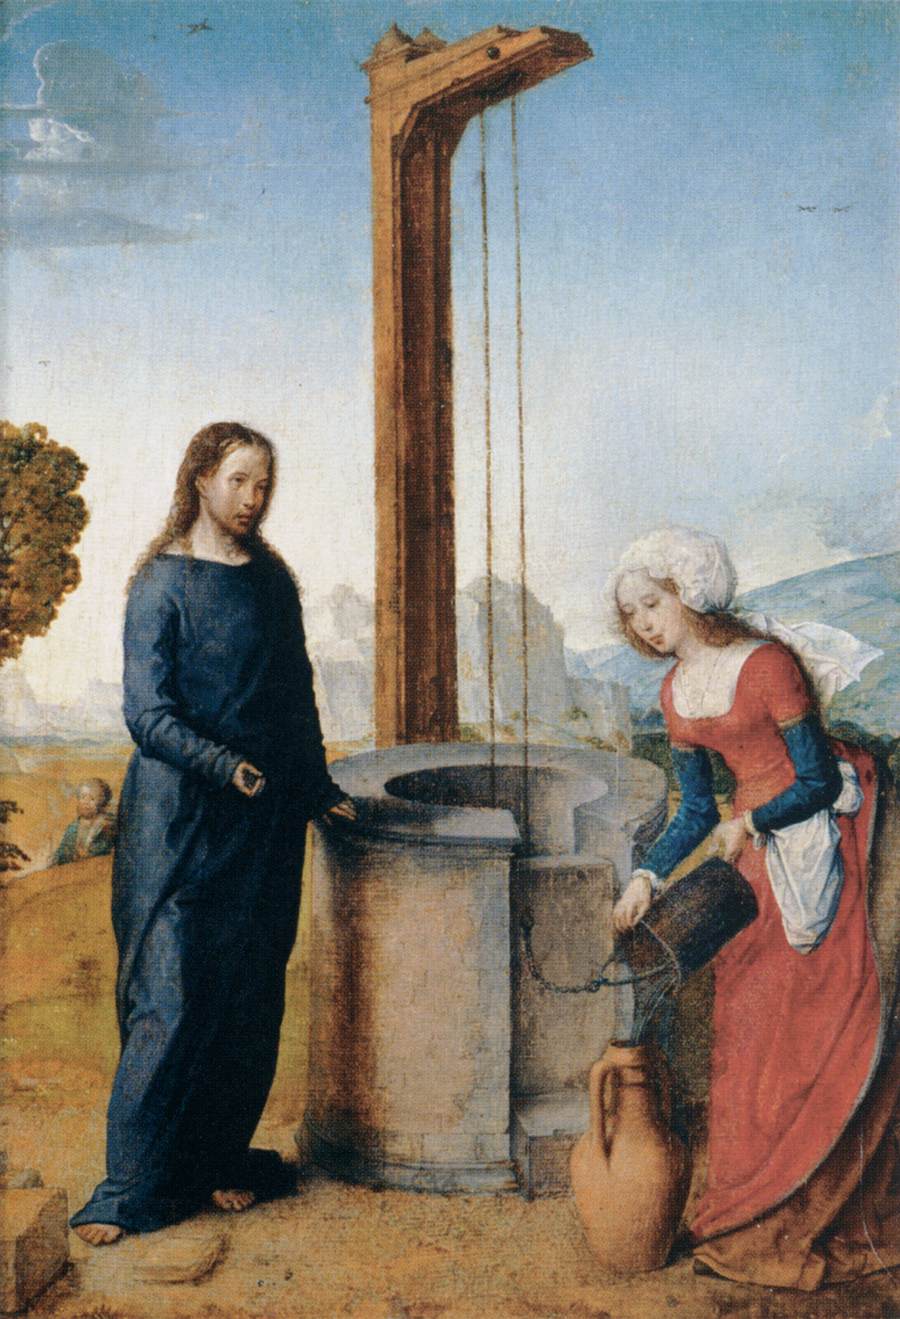 Cristo e a Mulher de Samaria